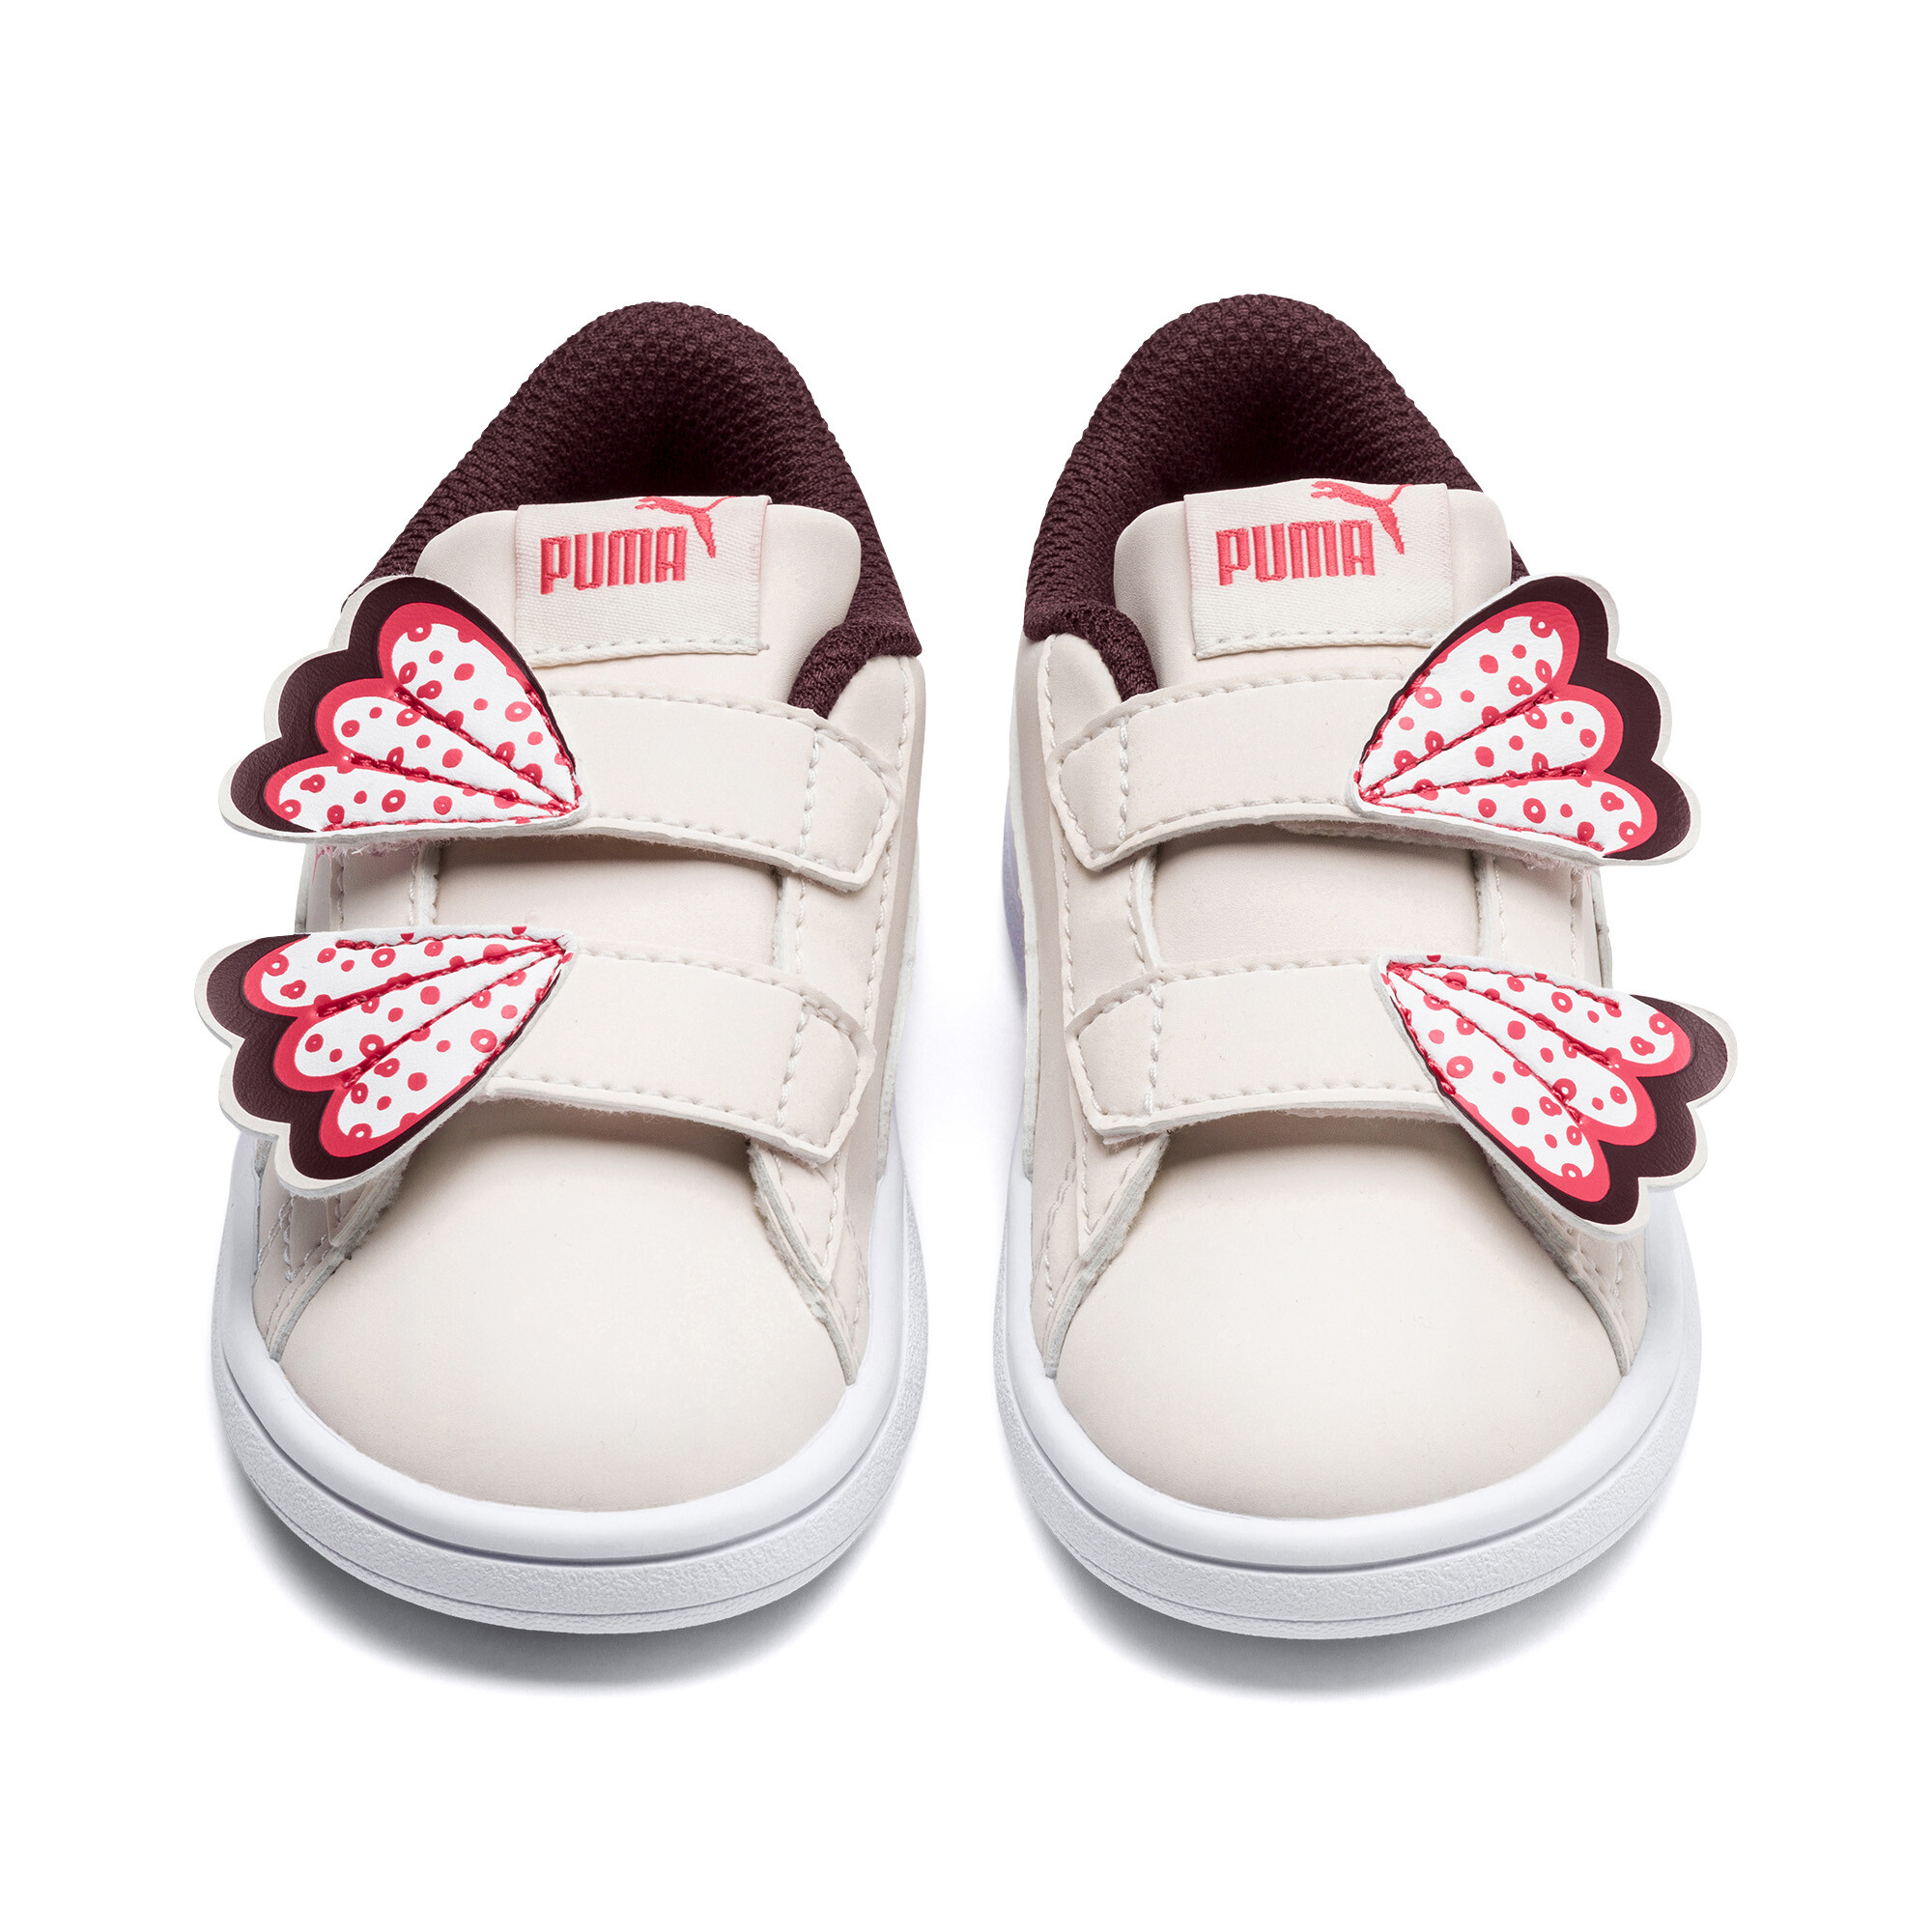 PUMA PUMA Smash v2 Butterfly AC Toddler Shoes Girls Shoe ...